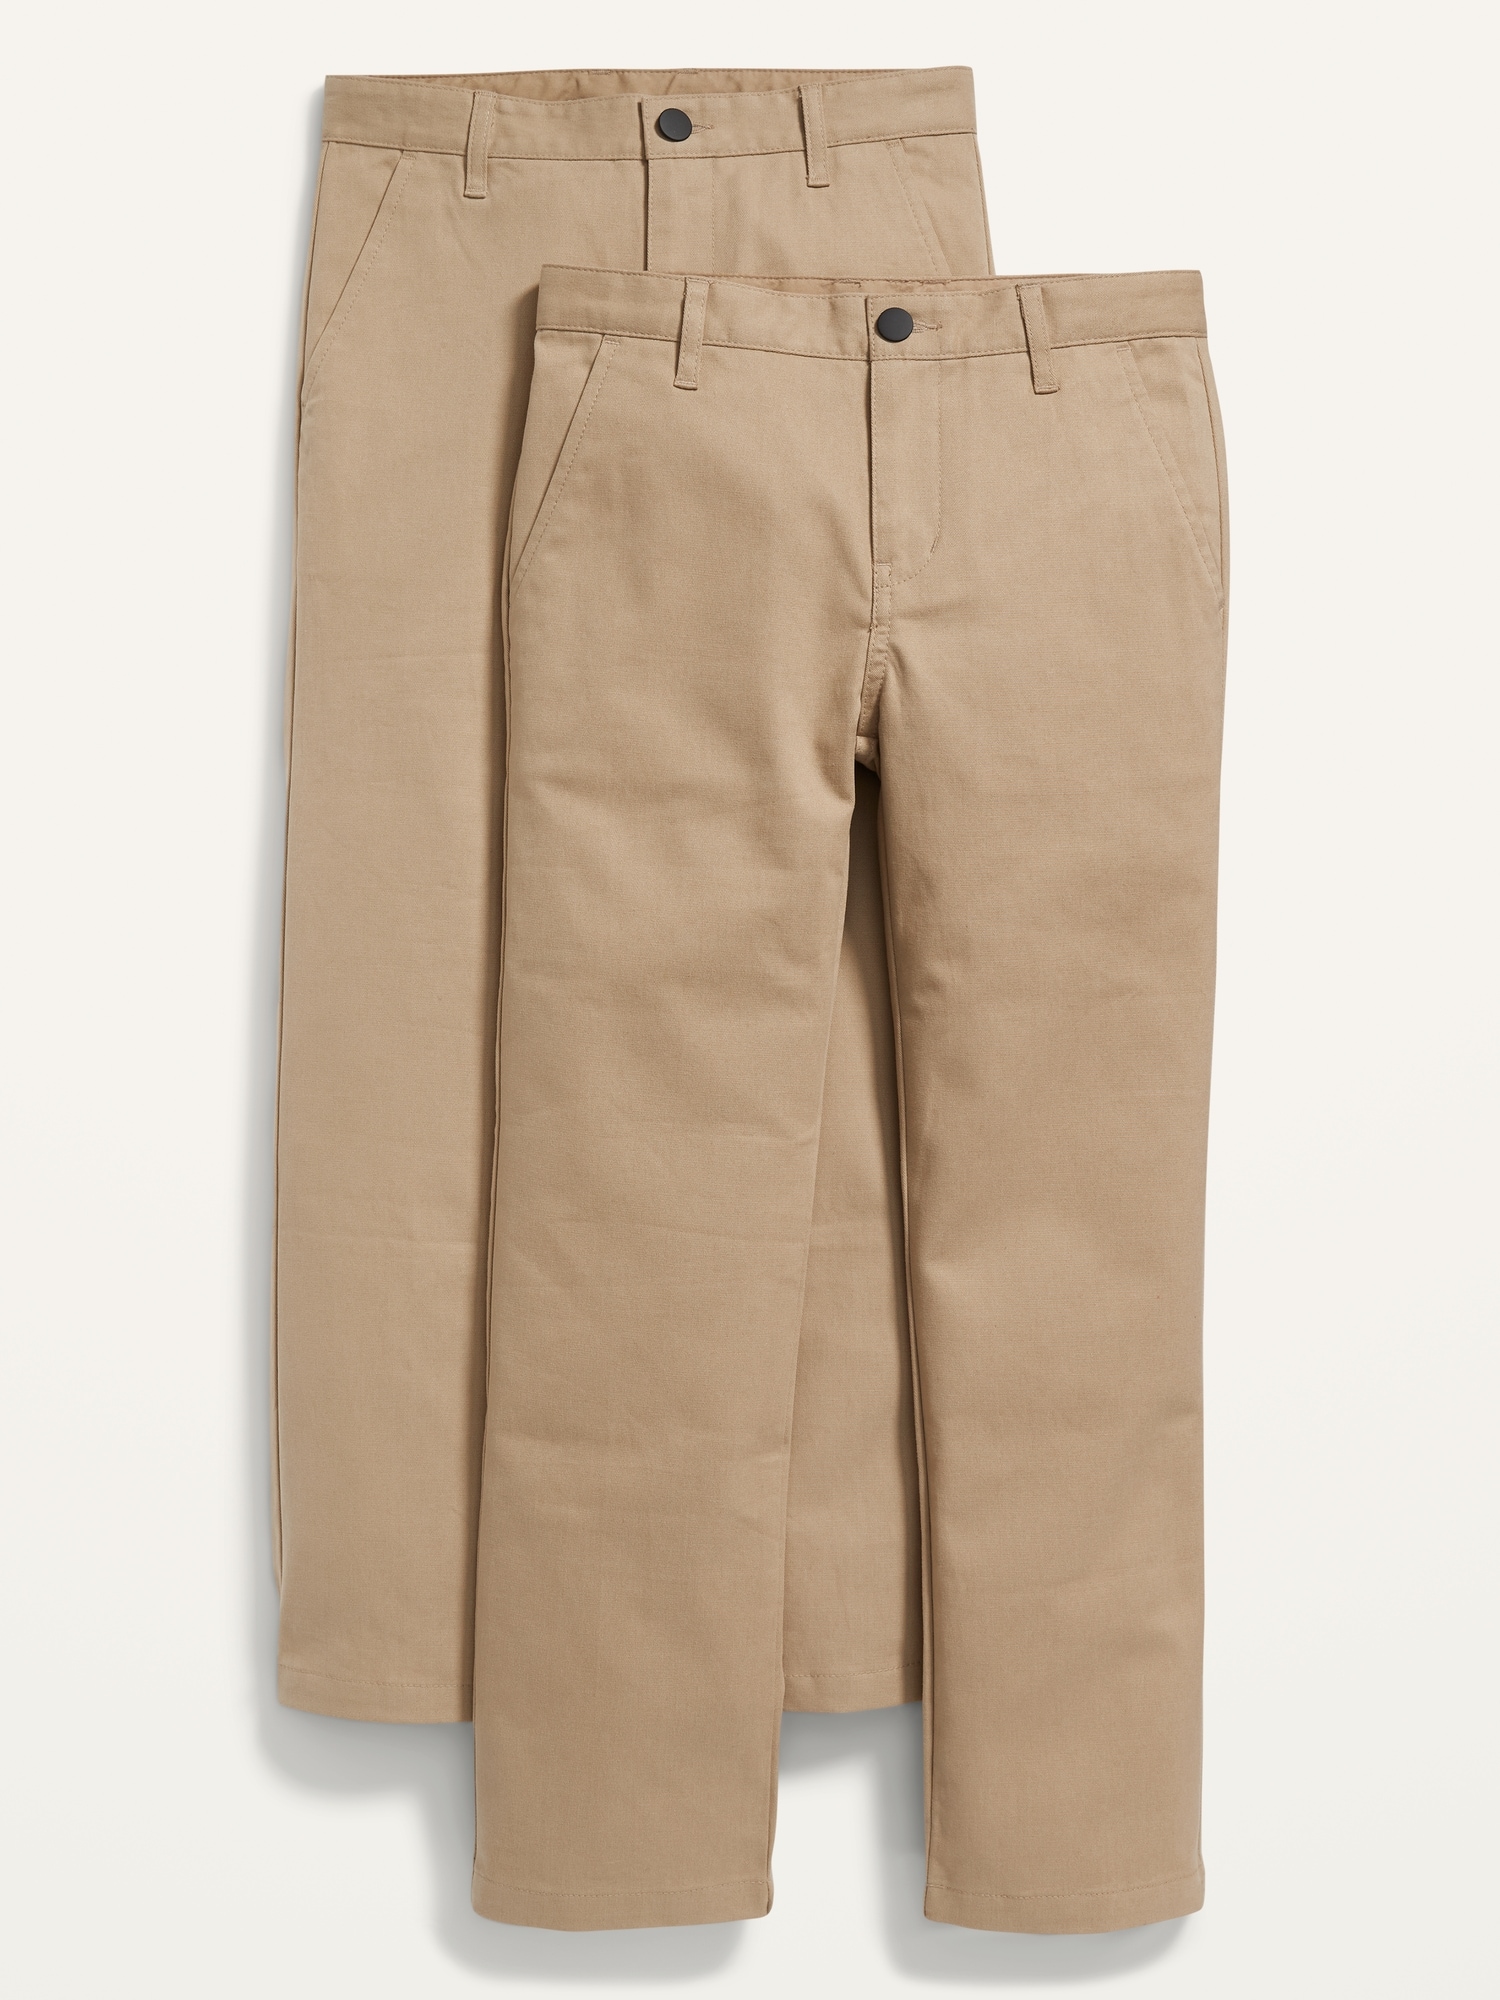 Uniform Straight Leg Pants for Boys 2-Pack Hot Deal